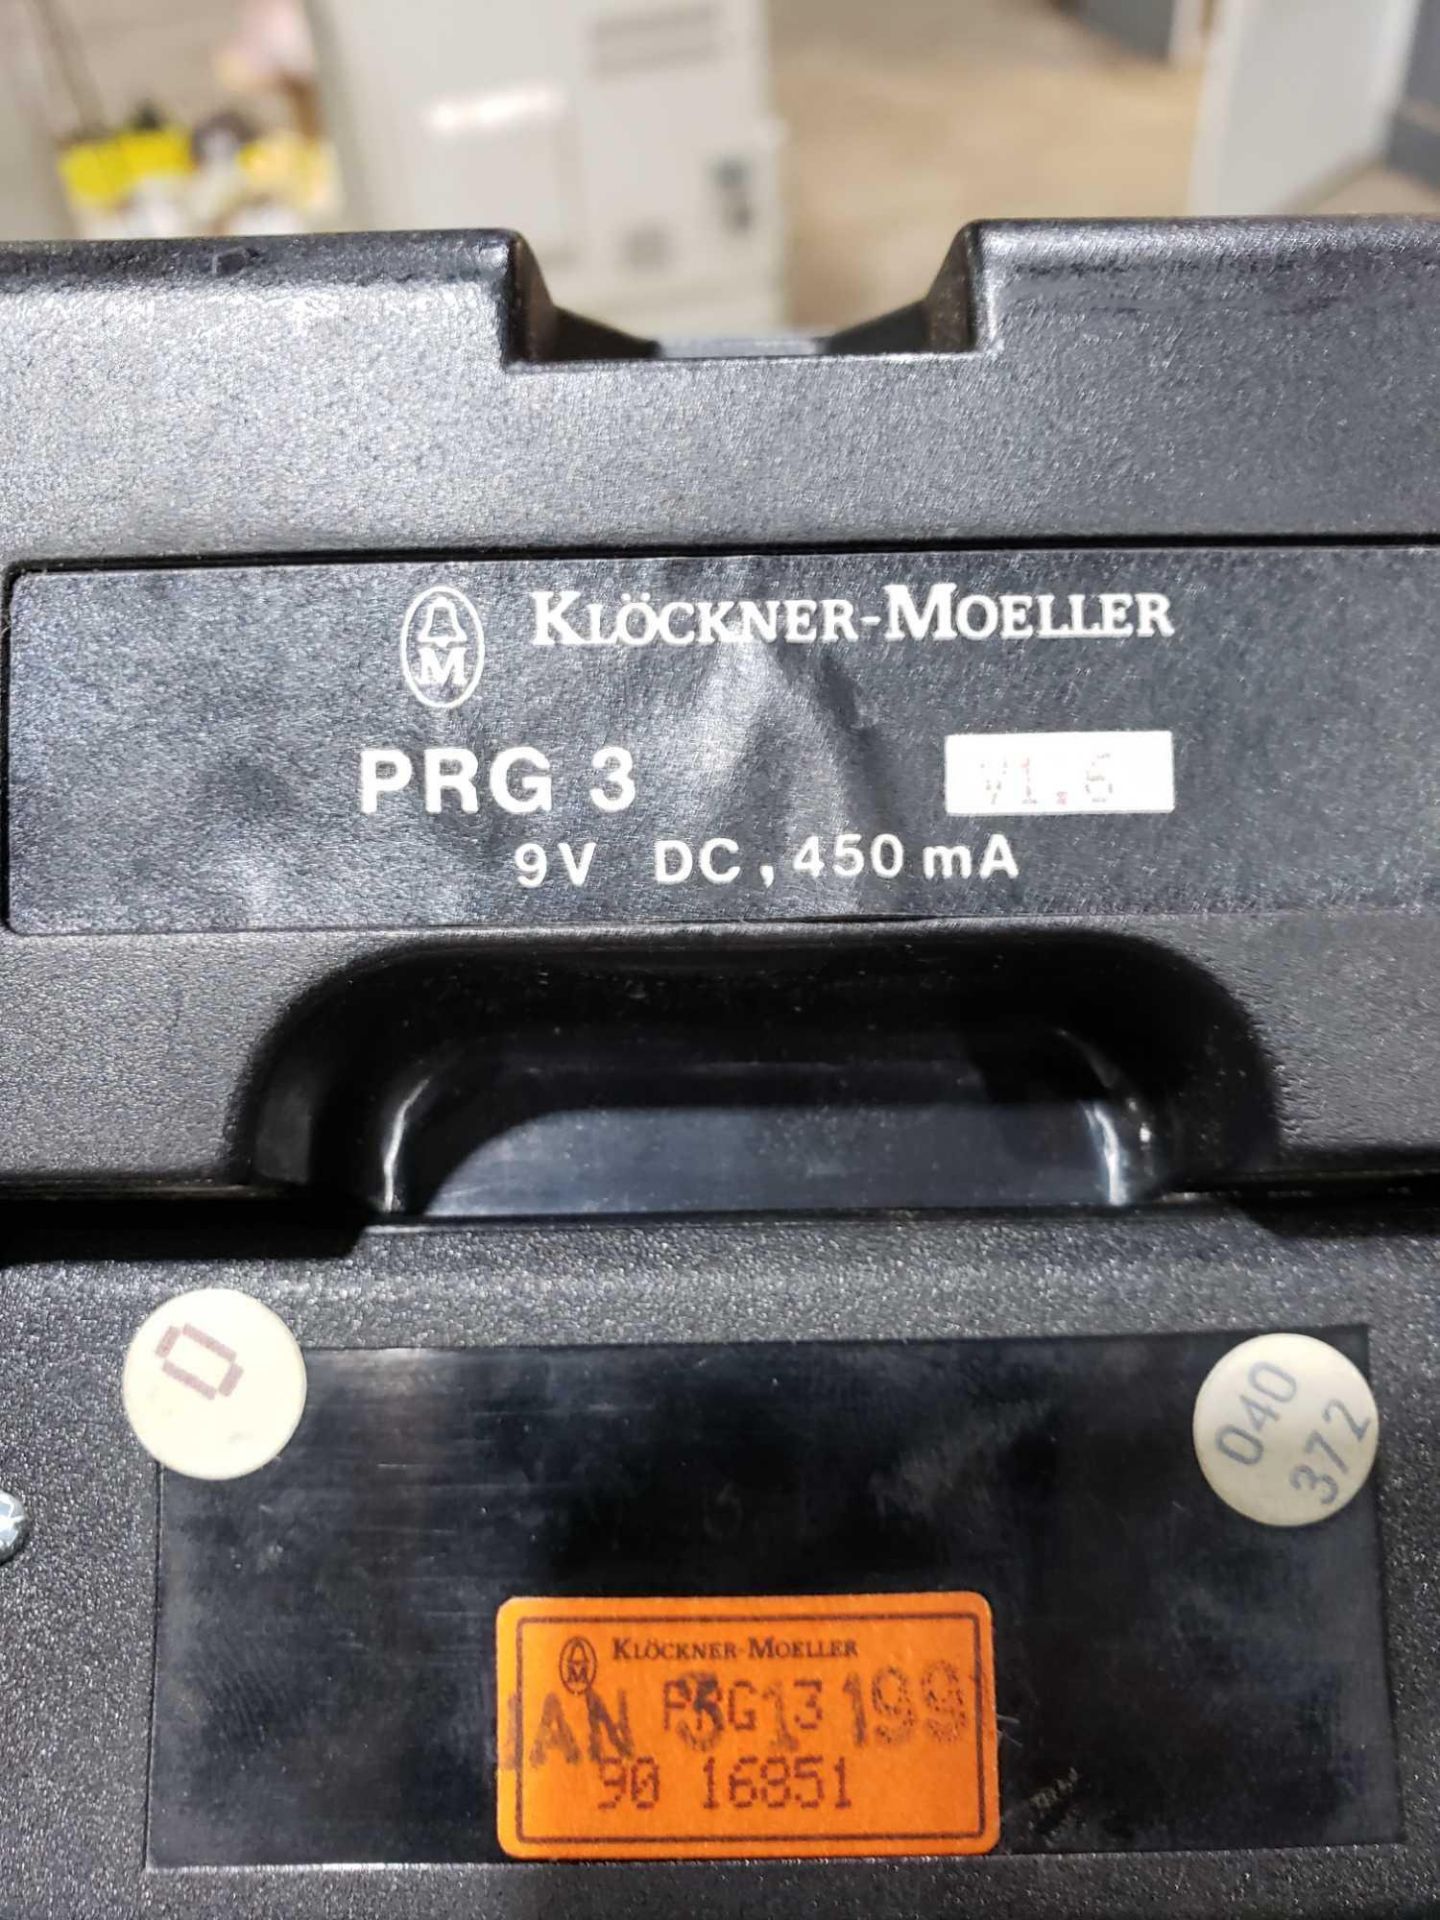 Klockner-Moeller model PRG3 programmer - Image 2 of 2